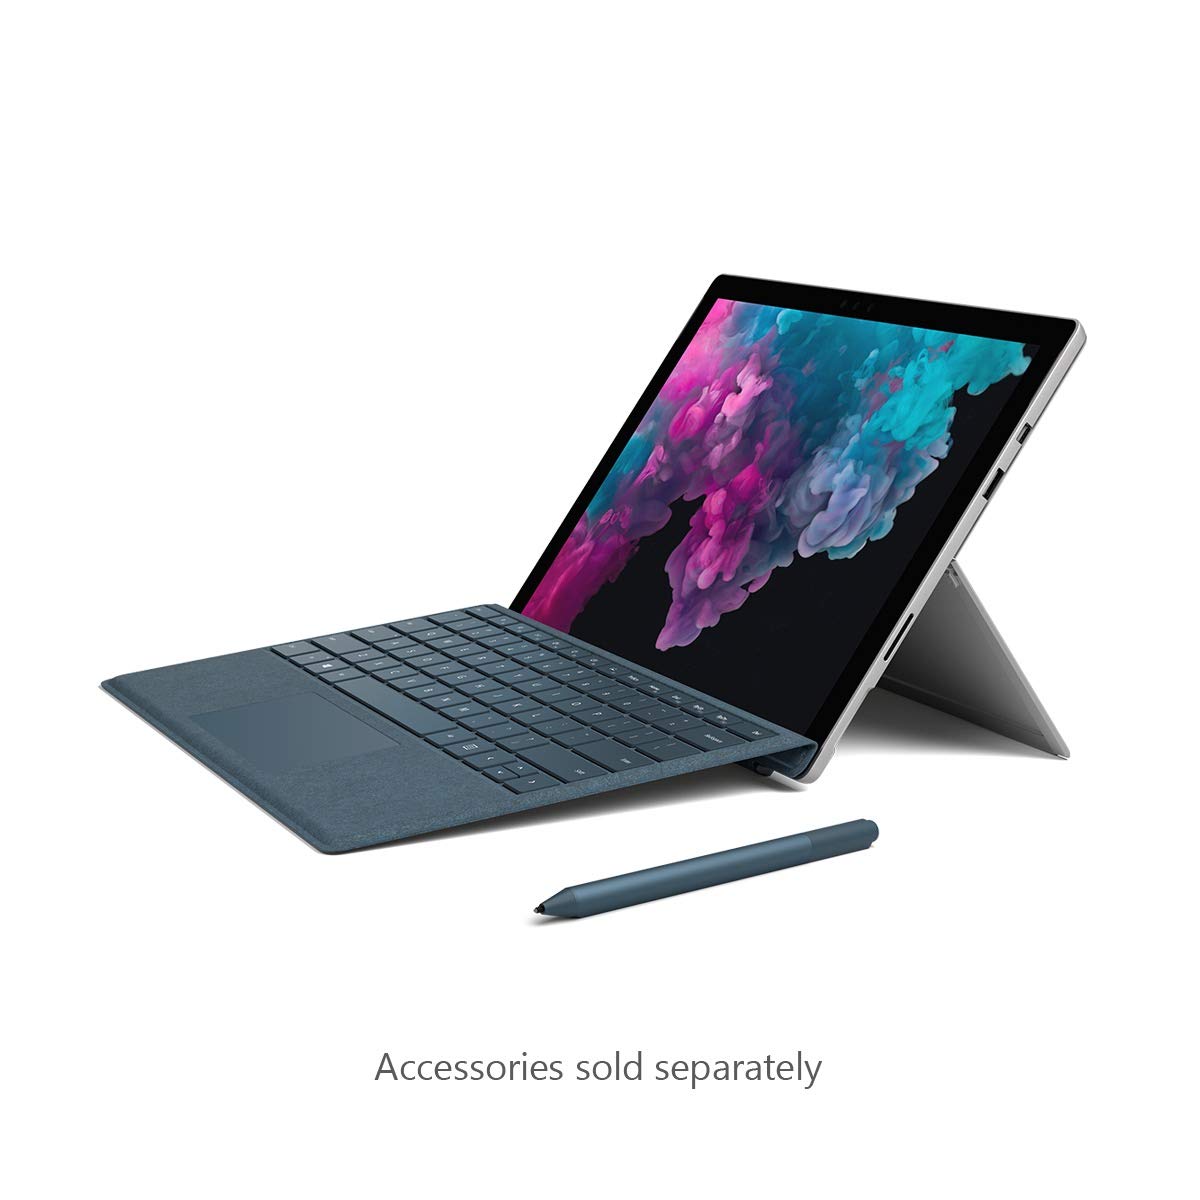 Microsoft Surface Pro 6 (Intel Core i7, 8GB RAM, 256GB) - Newest Version